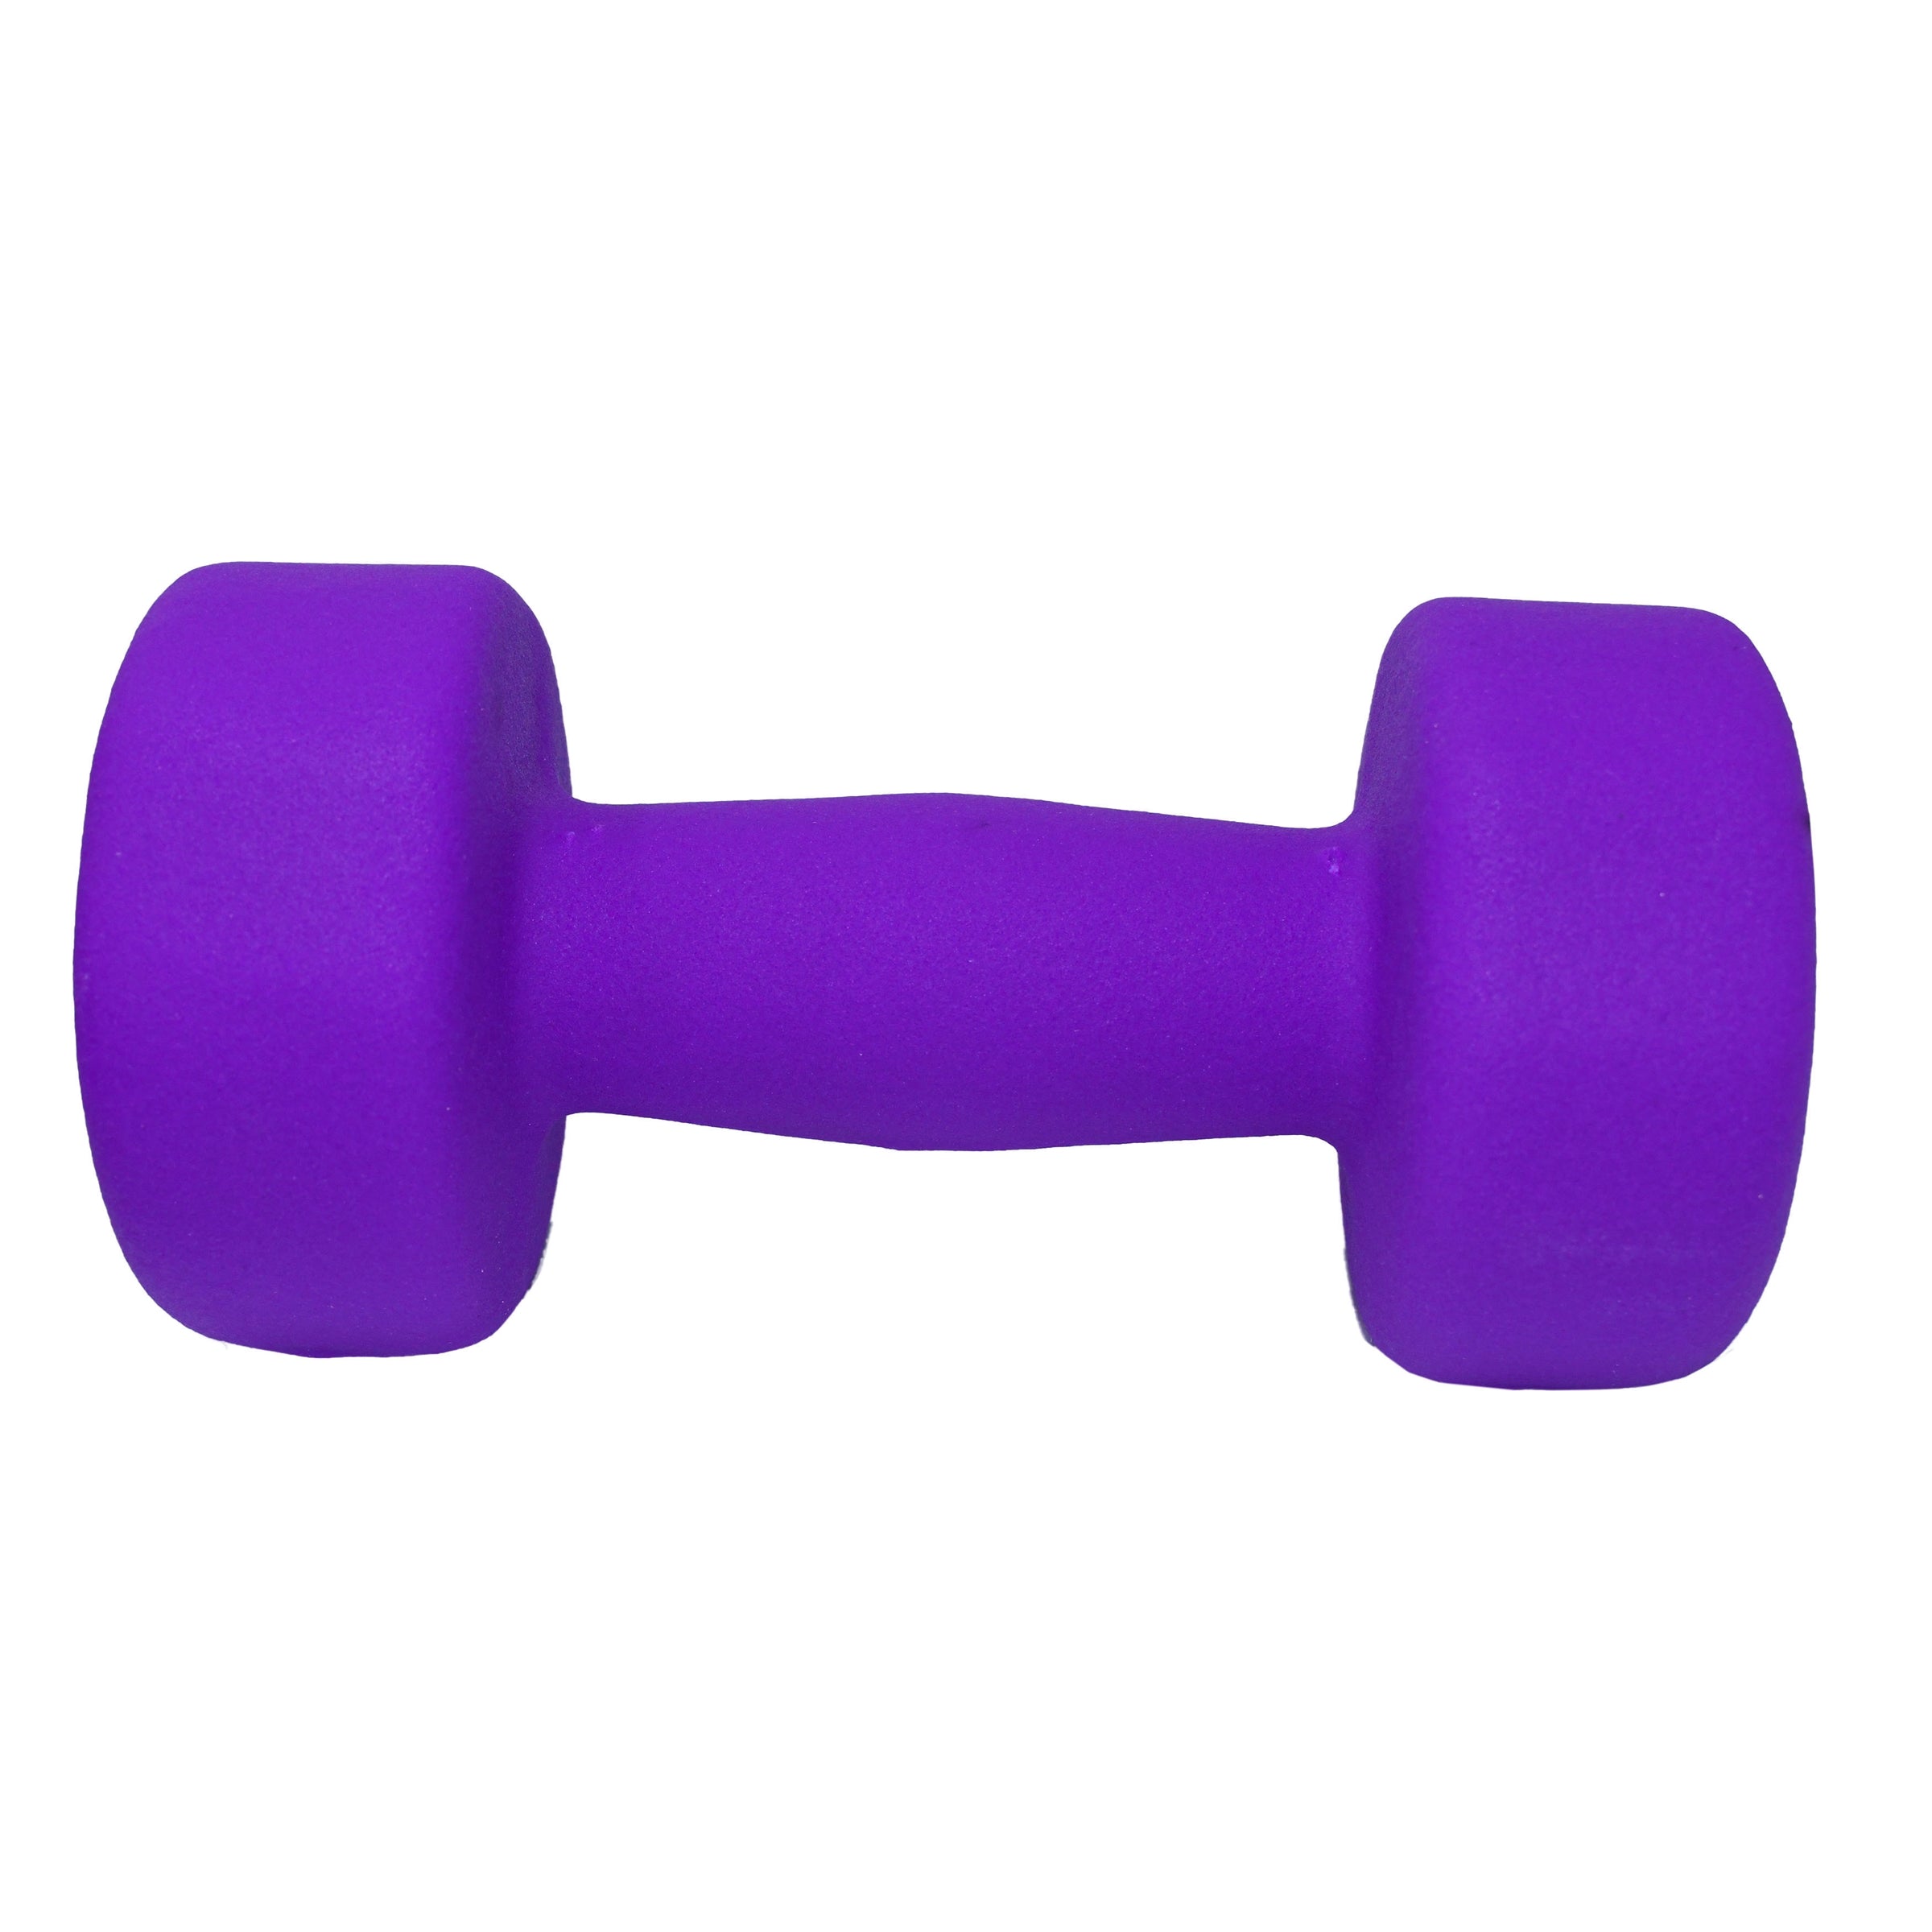 Non-Slip Hexagonal Shaped Free Weight Dumbbells - 12 lbs - Purple - Set of 2